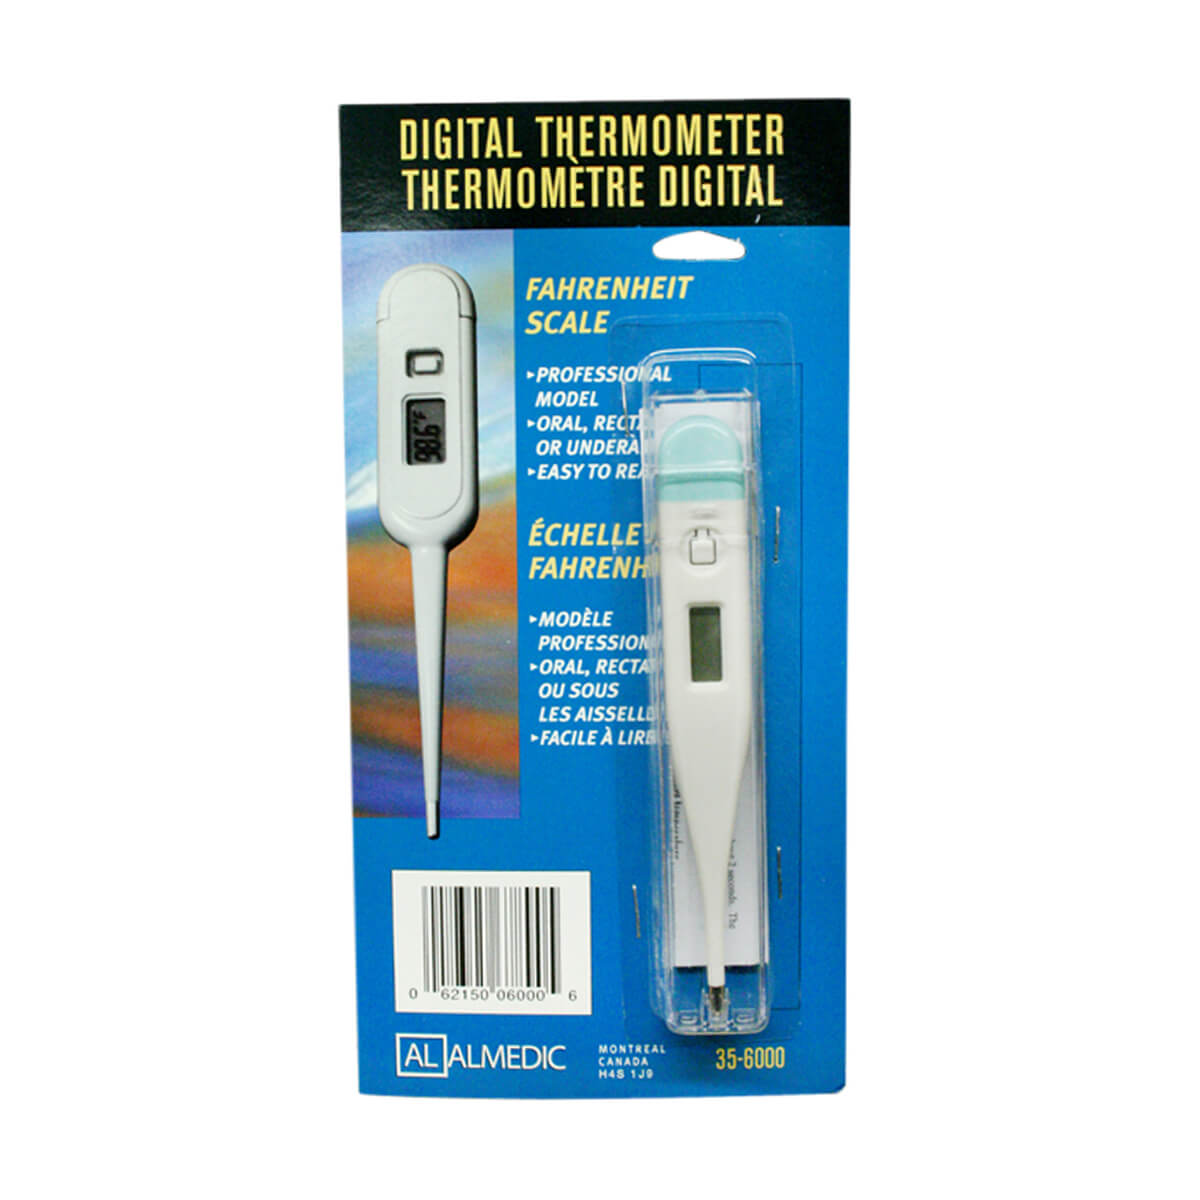 Digital Thermometer - Fahrenheit